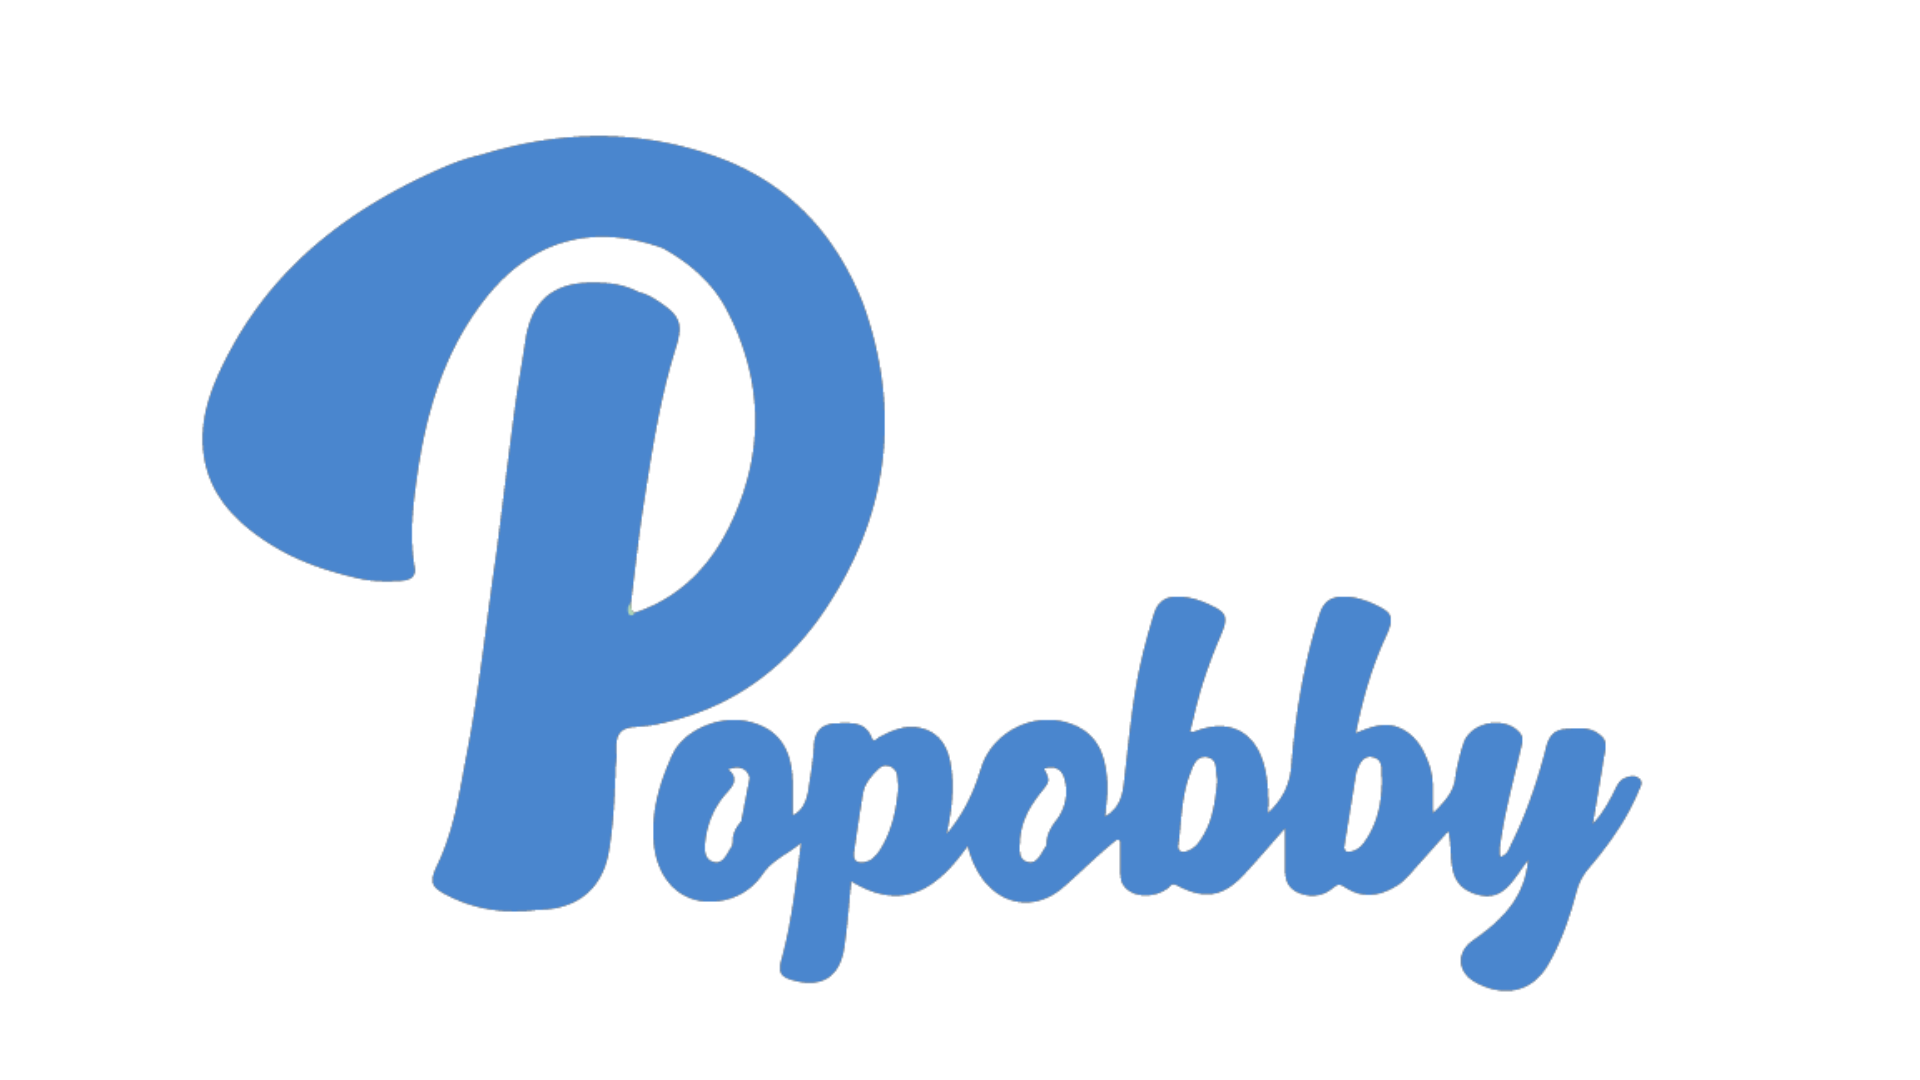 Popobby Logo